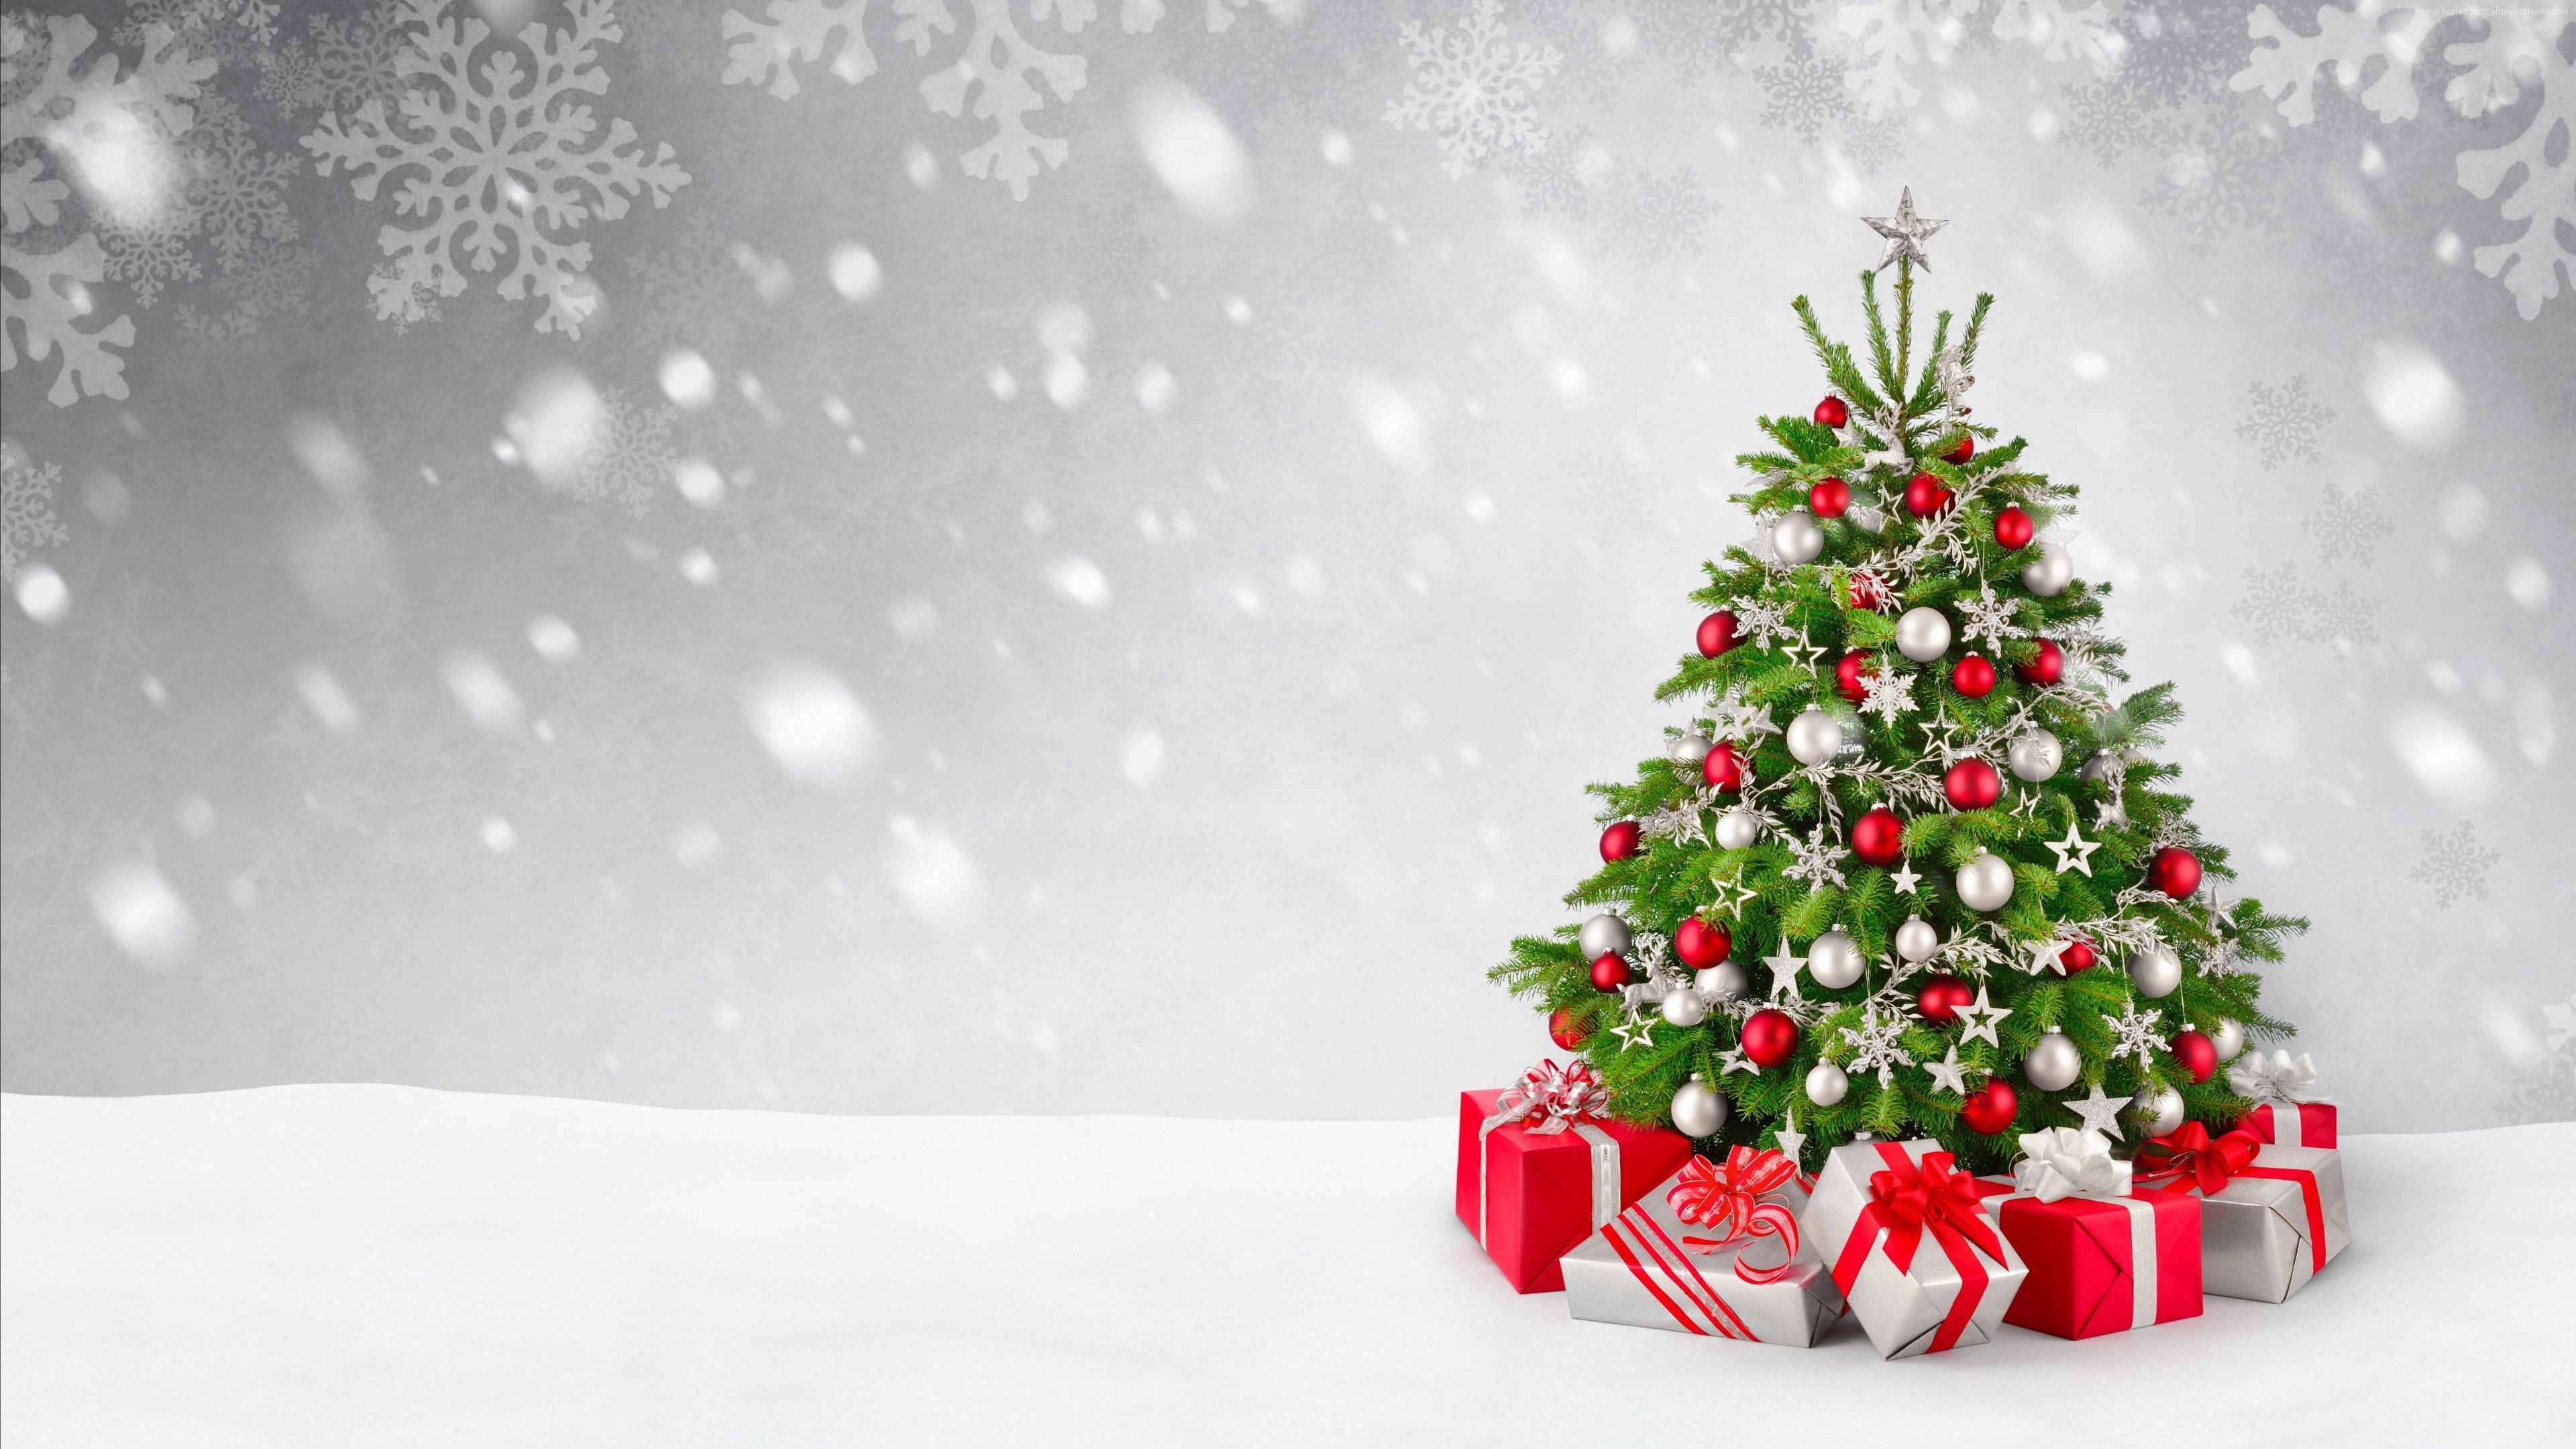 Fir tree in snow, Christmas and New Year, Gift-giving season, Festive wallpaper, 3840x2160 4K Desktop